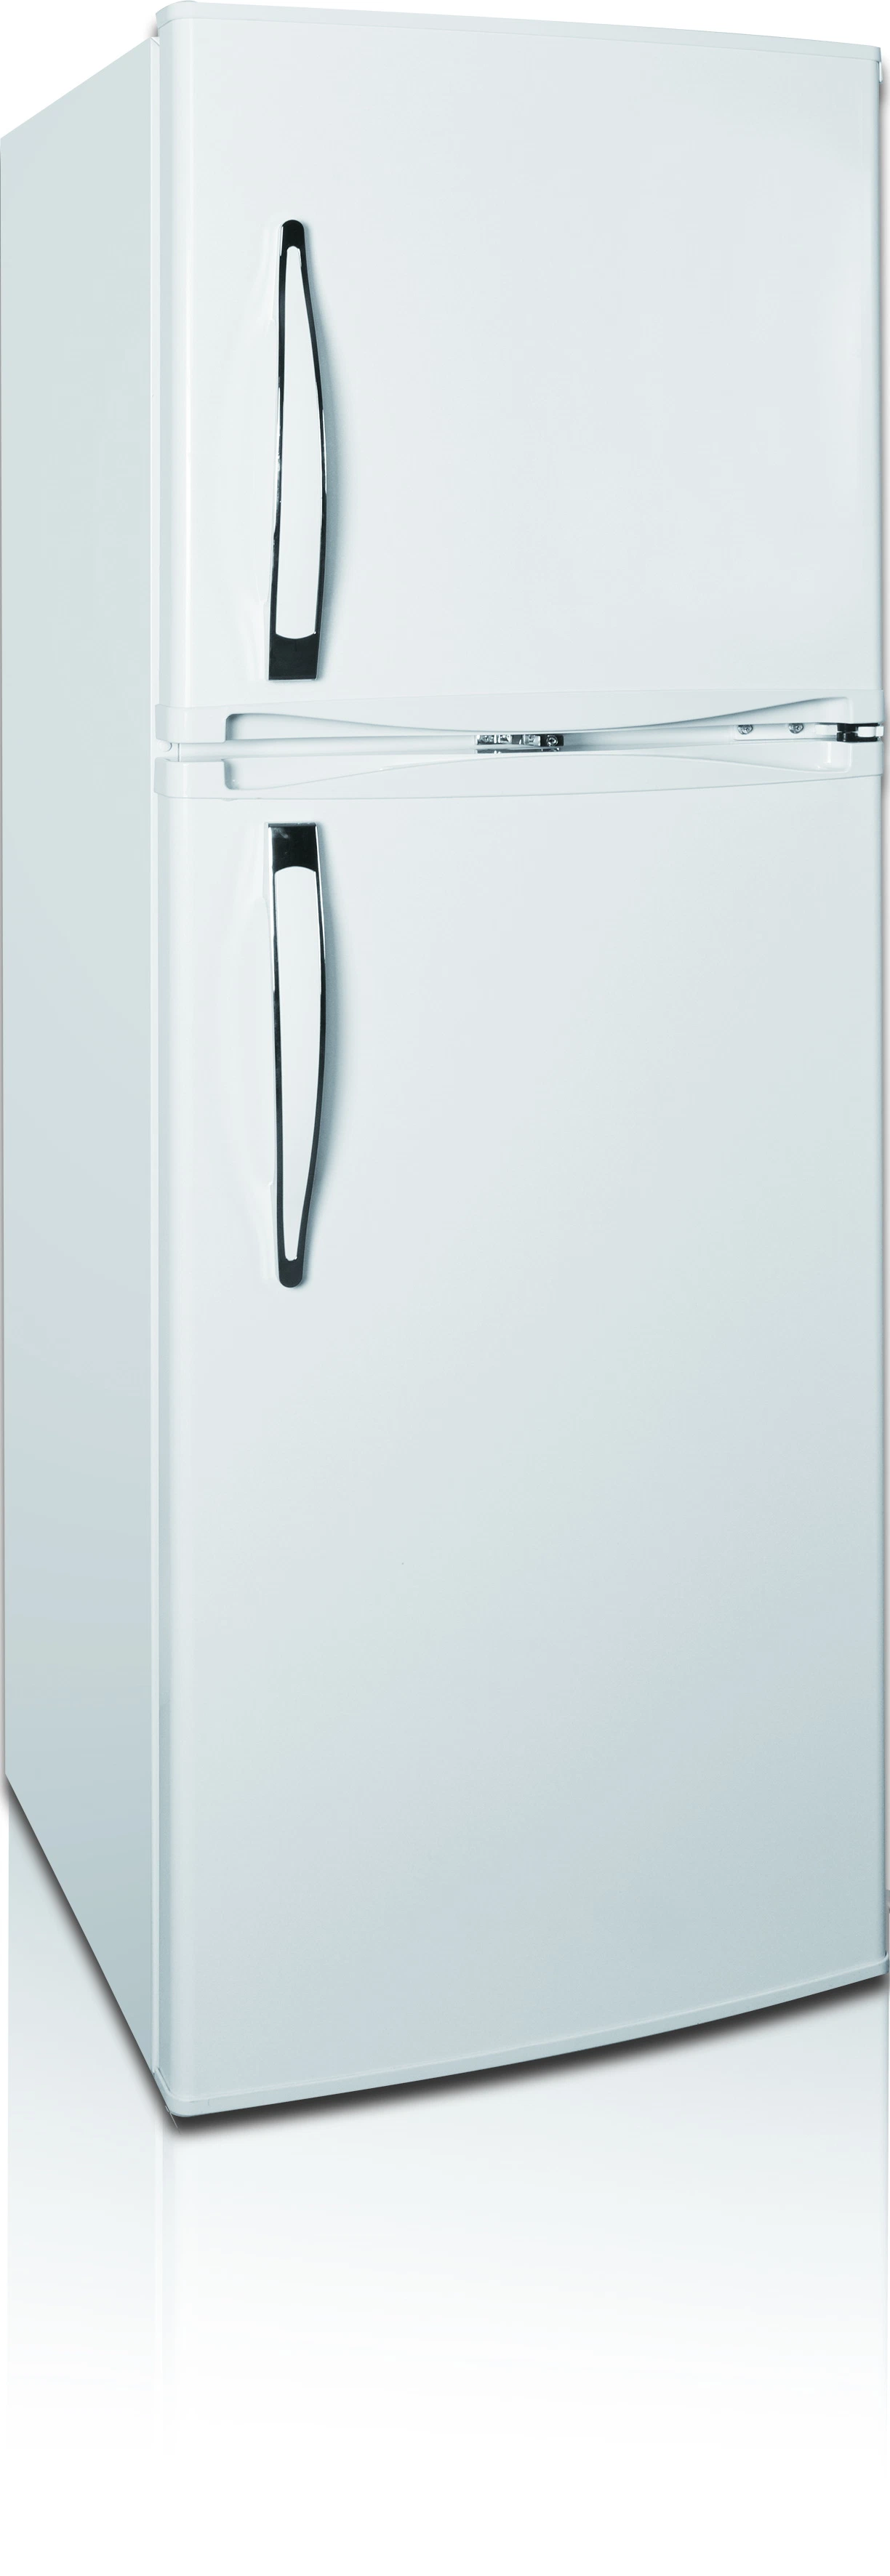 220L-230L Hot Selling Top Freezer Refrigerator Fridge Chest Freezer Home Use